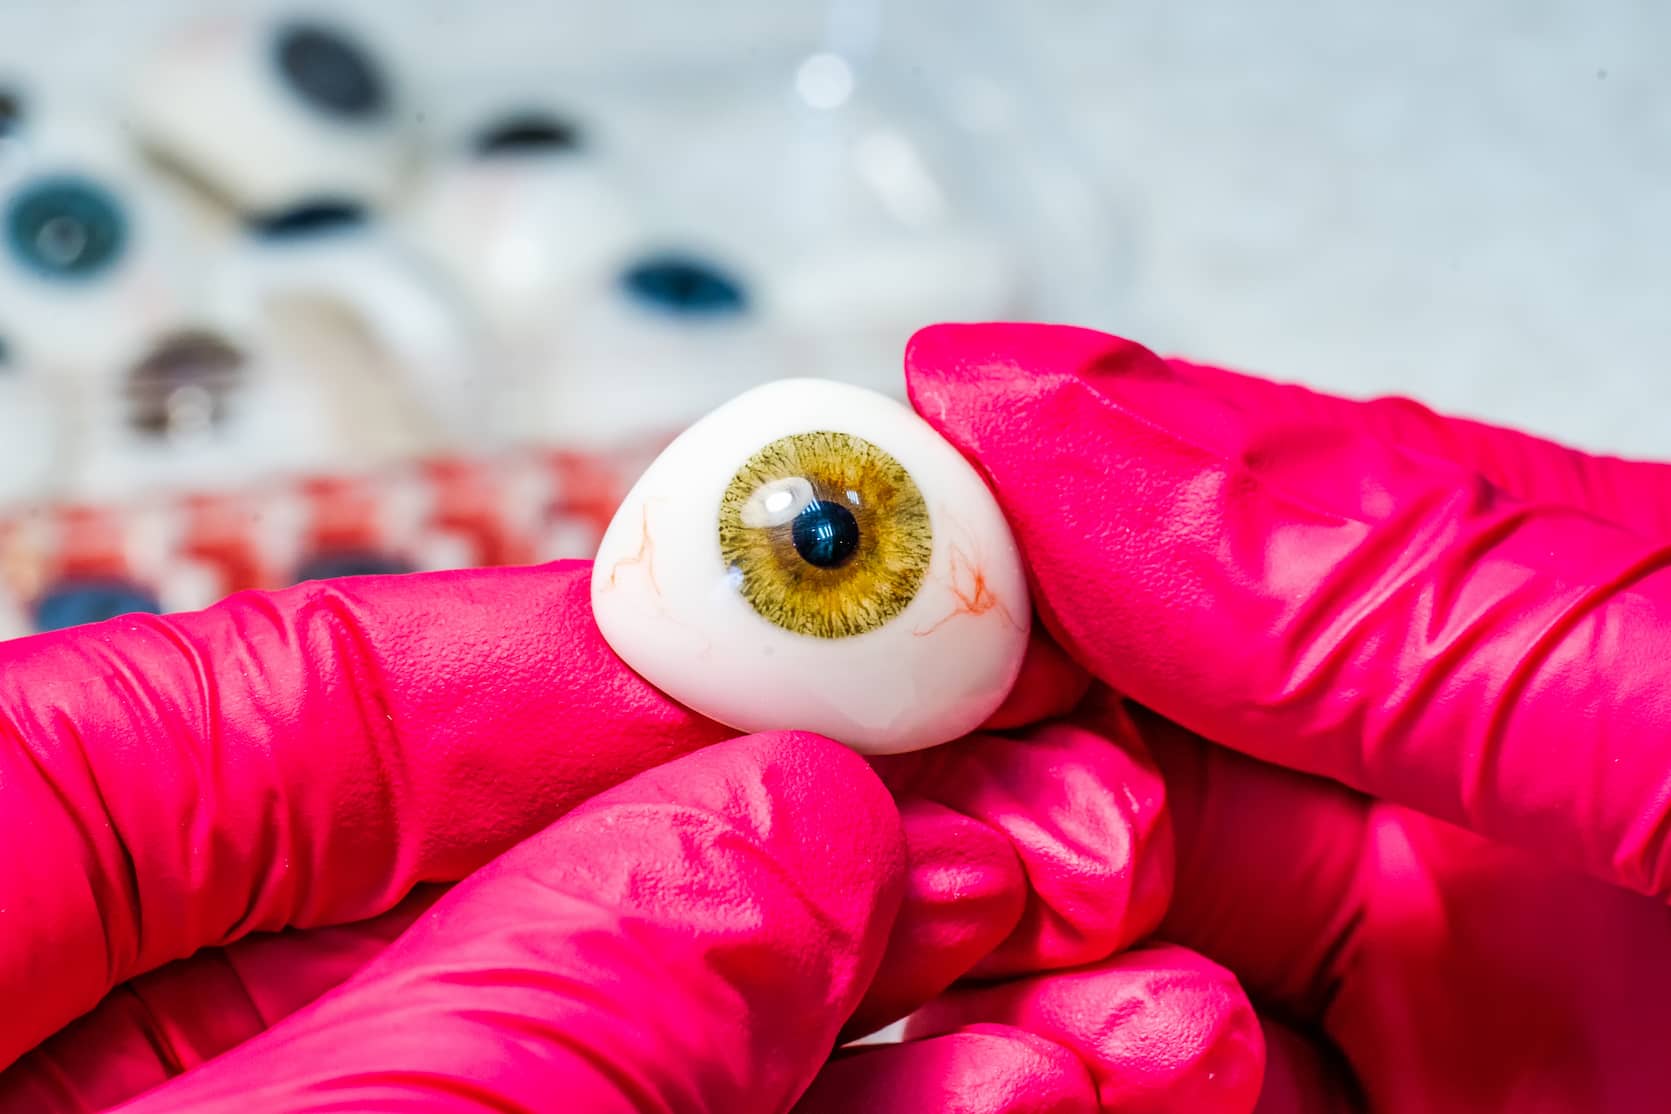 The Art of Ocular Prosthesis Design